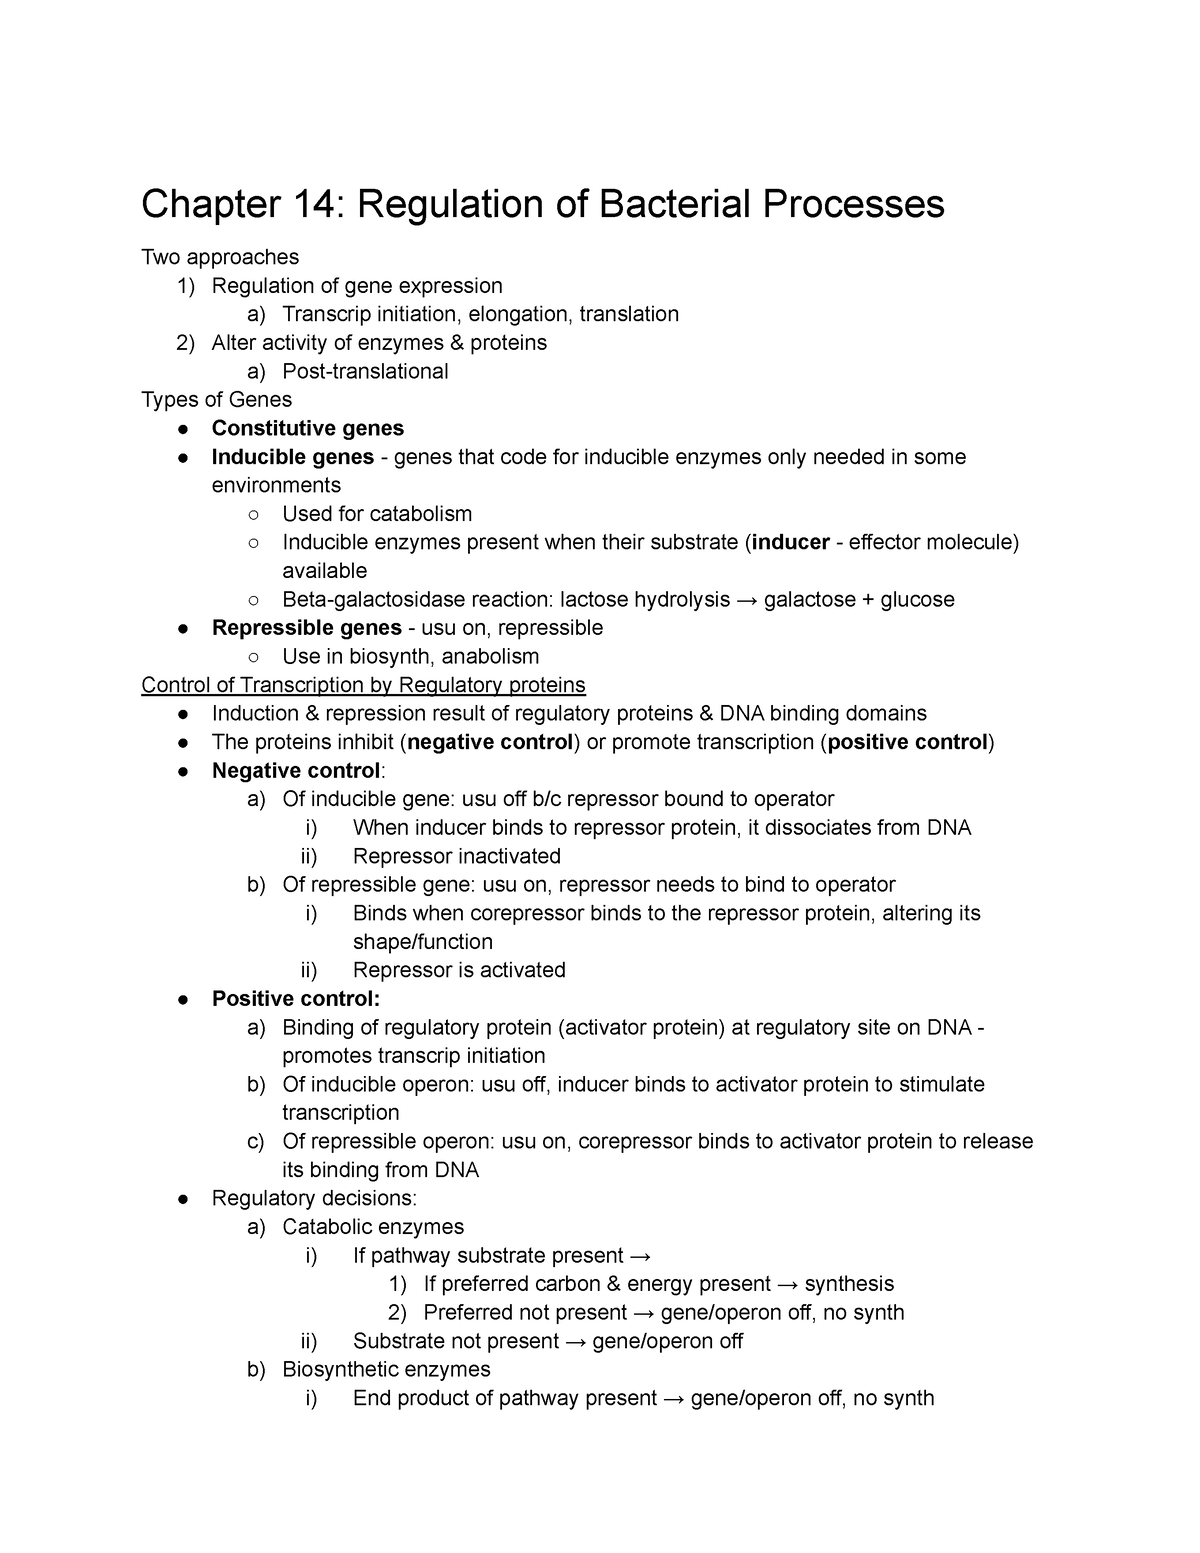 Microbio Ch 14 - Professor: Dr. Esiobu - Chapter 14: Regulation of ...